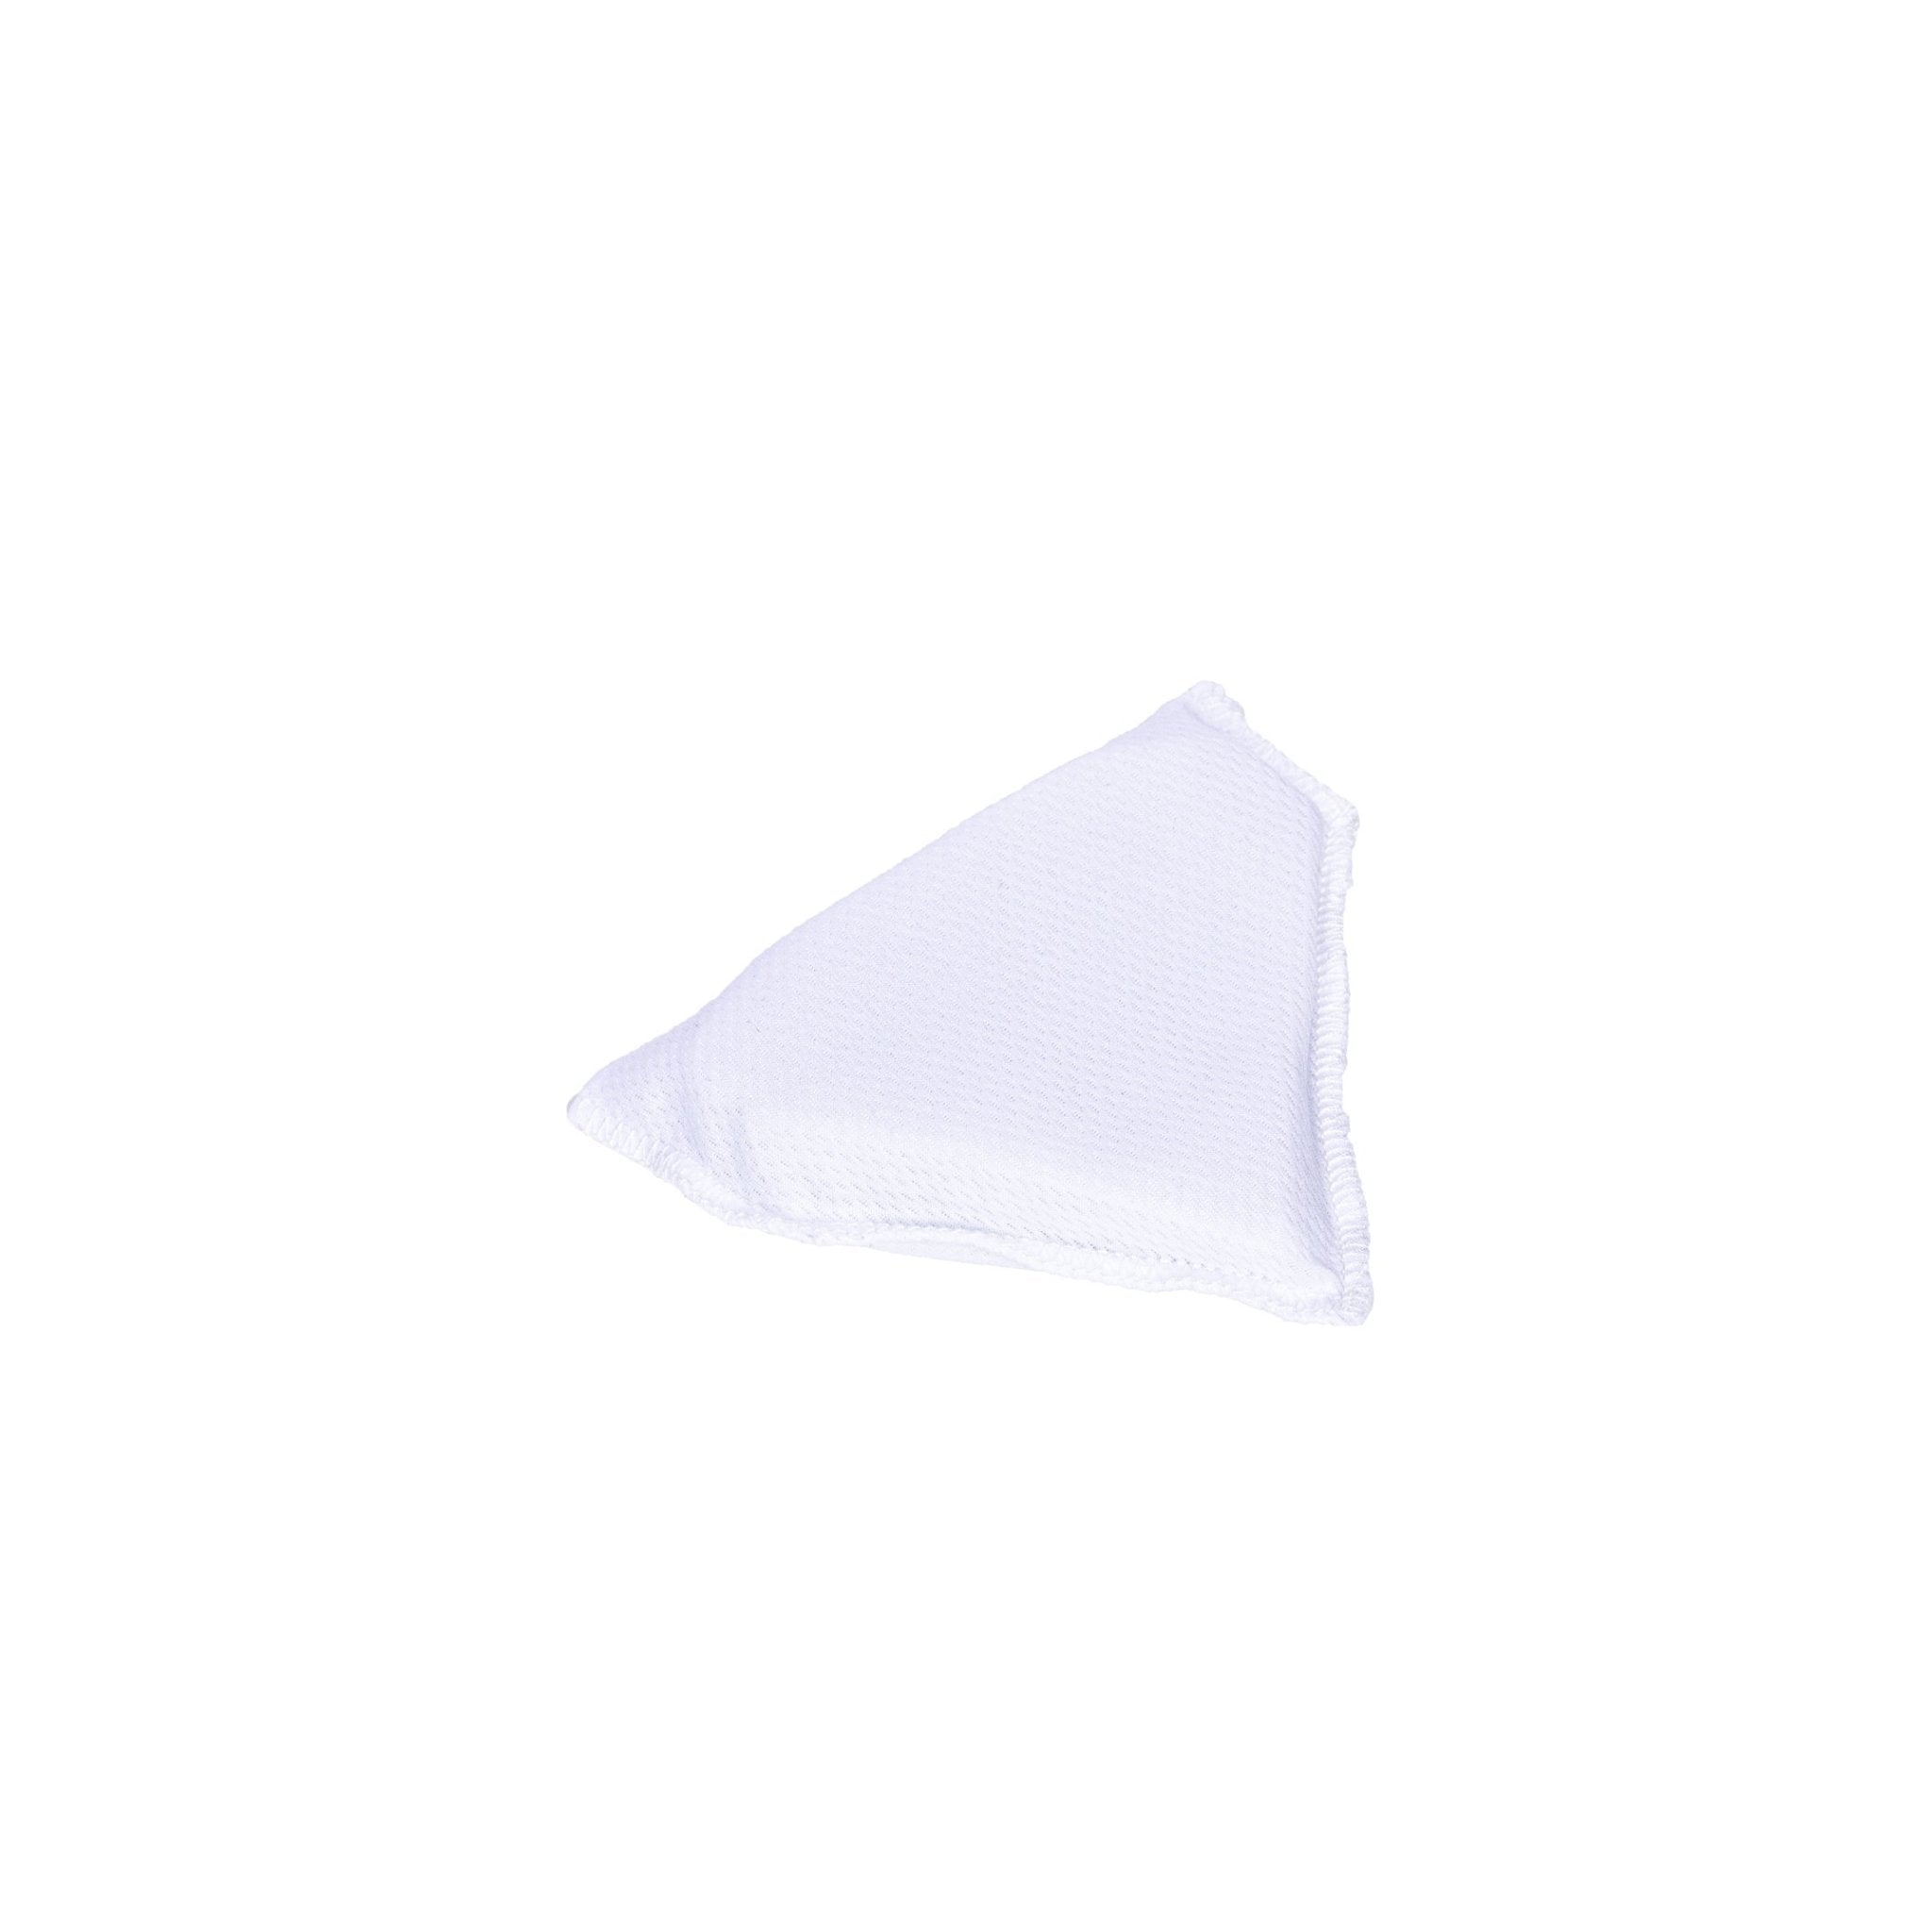 Varro Triangular Pad - Soniclean